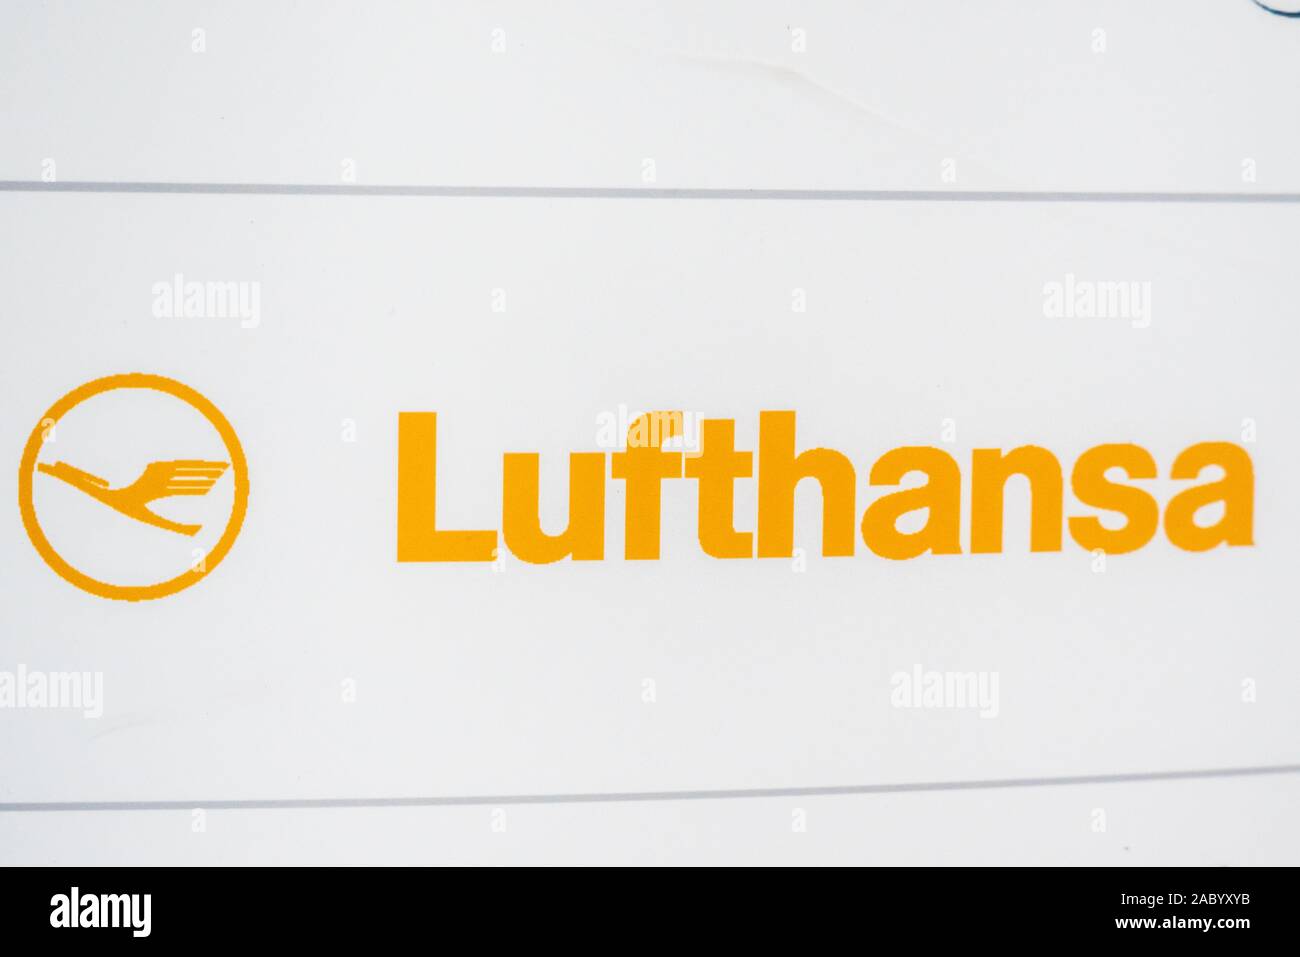 Lufthansa logo seen at Hartsfield-Jackson Atlanta International Airport. Stock Photo